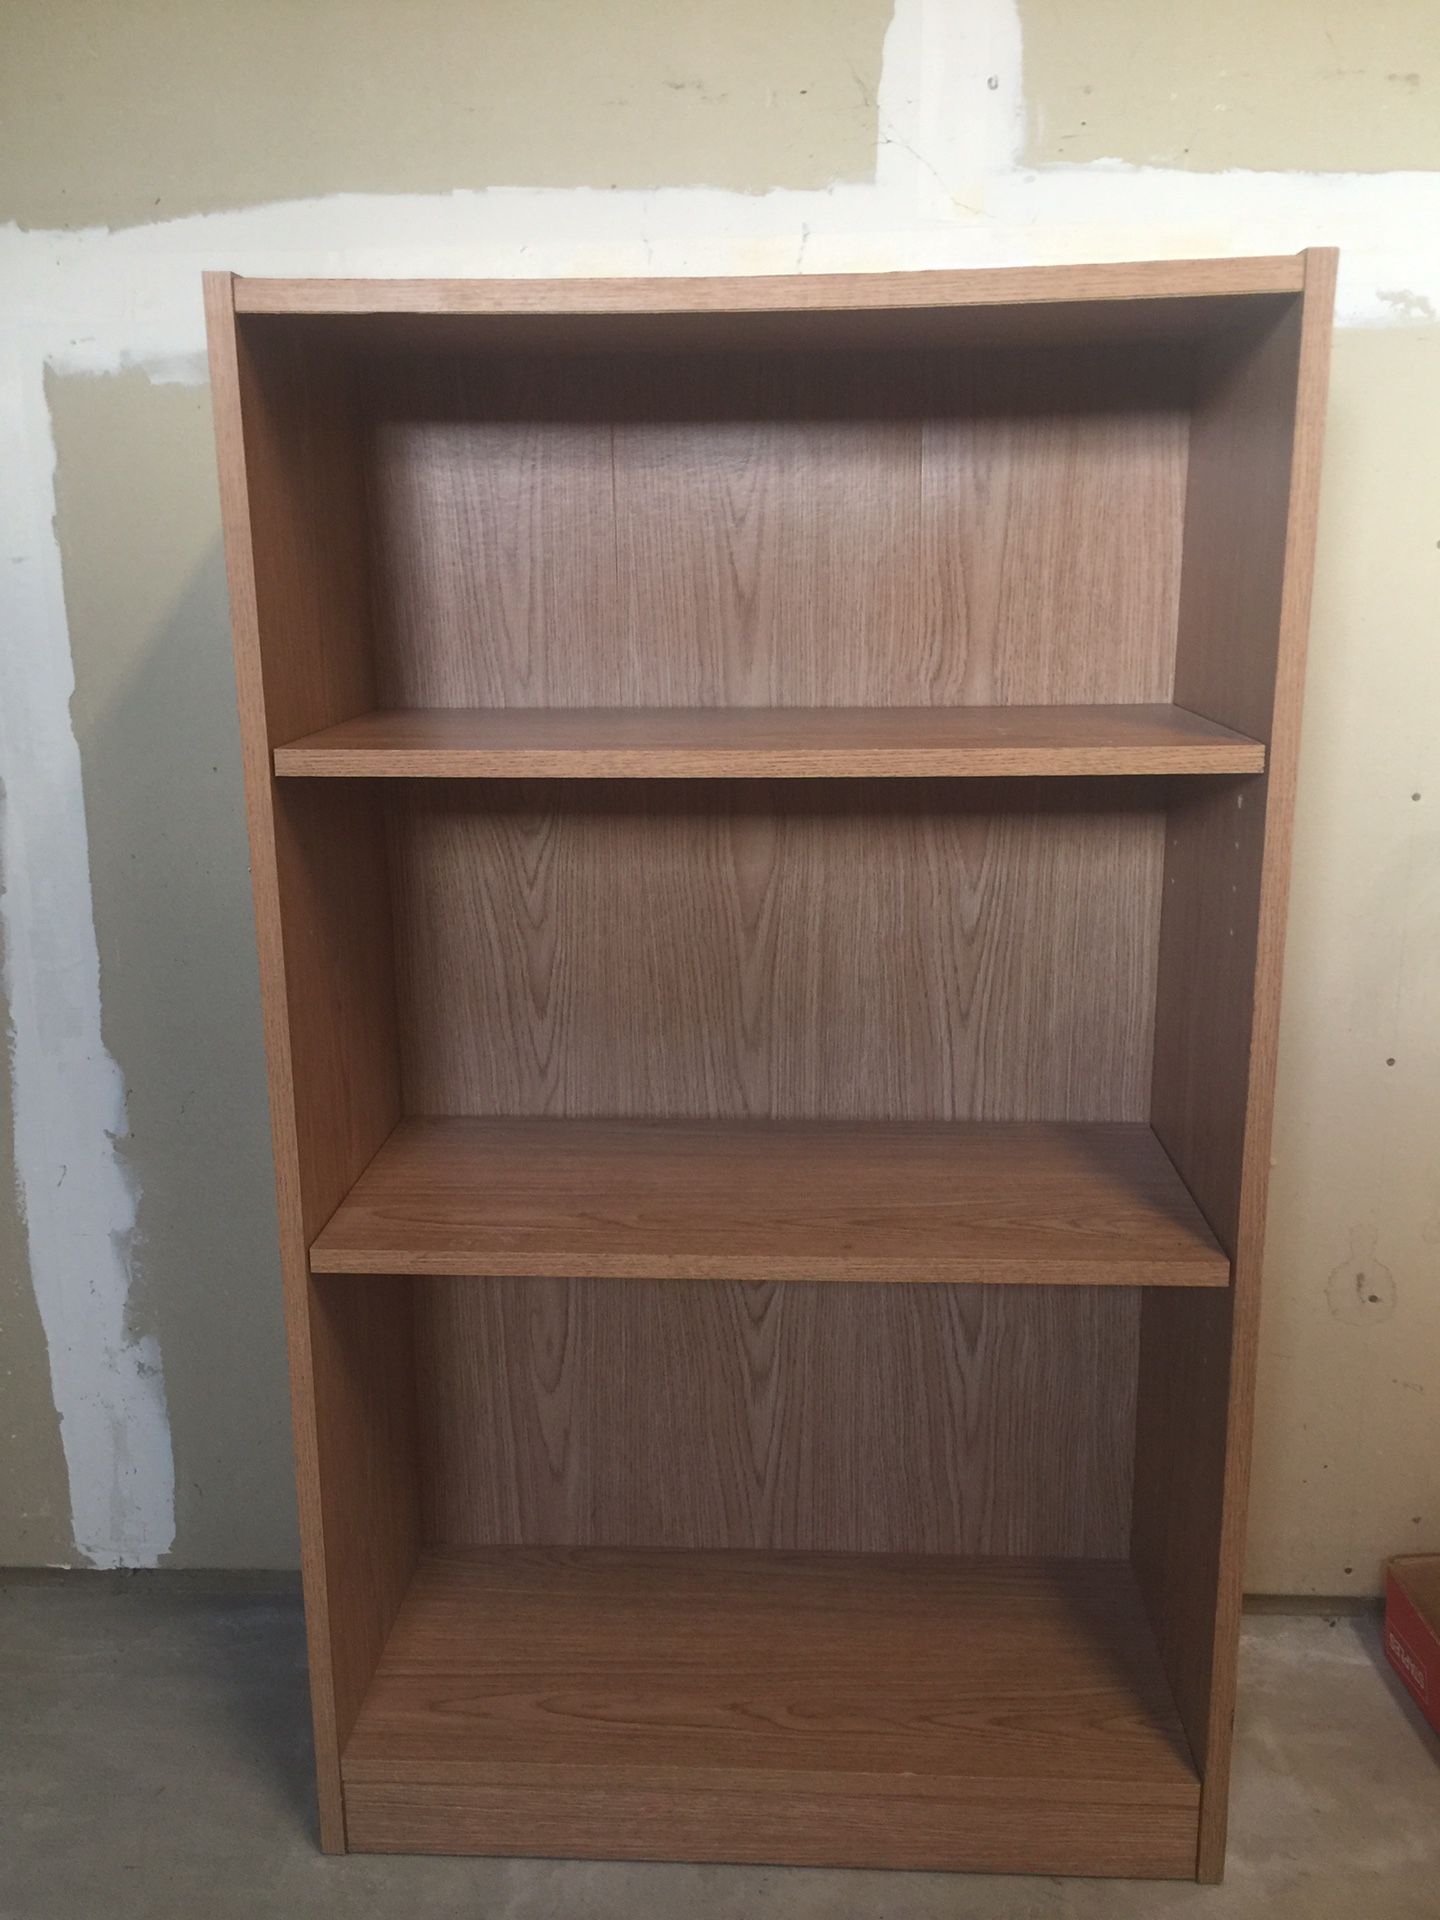 Brown Bookshelf with Adjustable Shelves